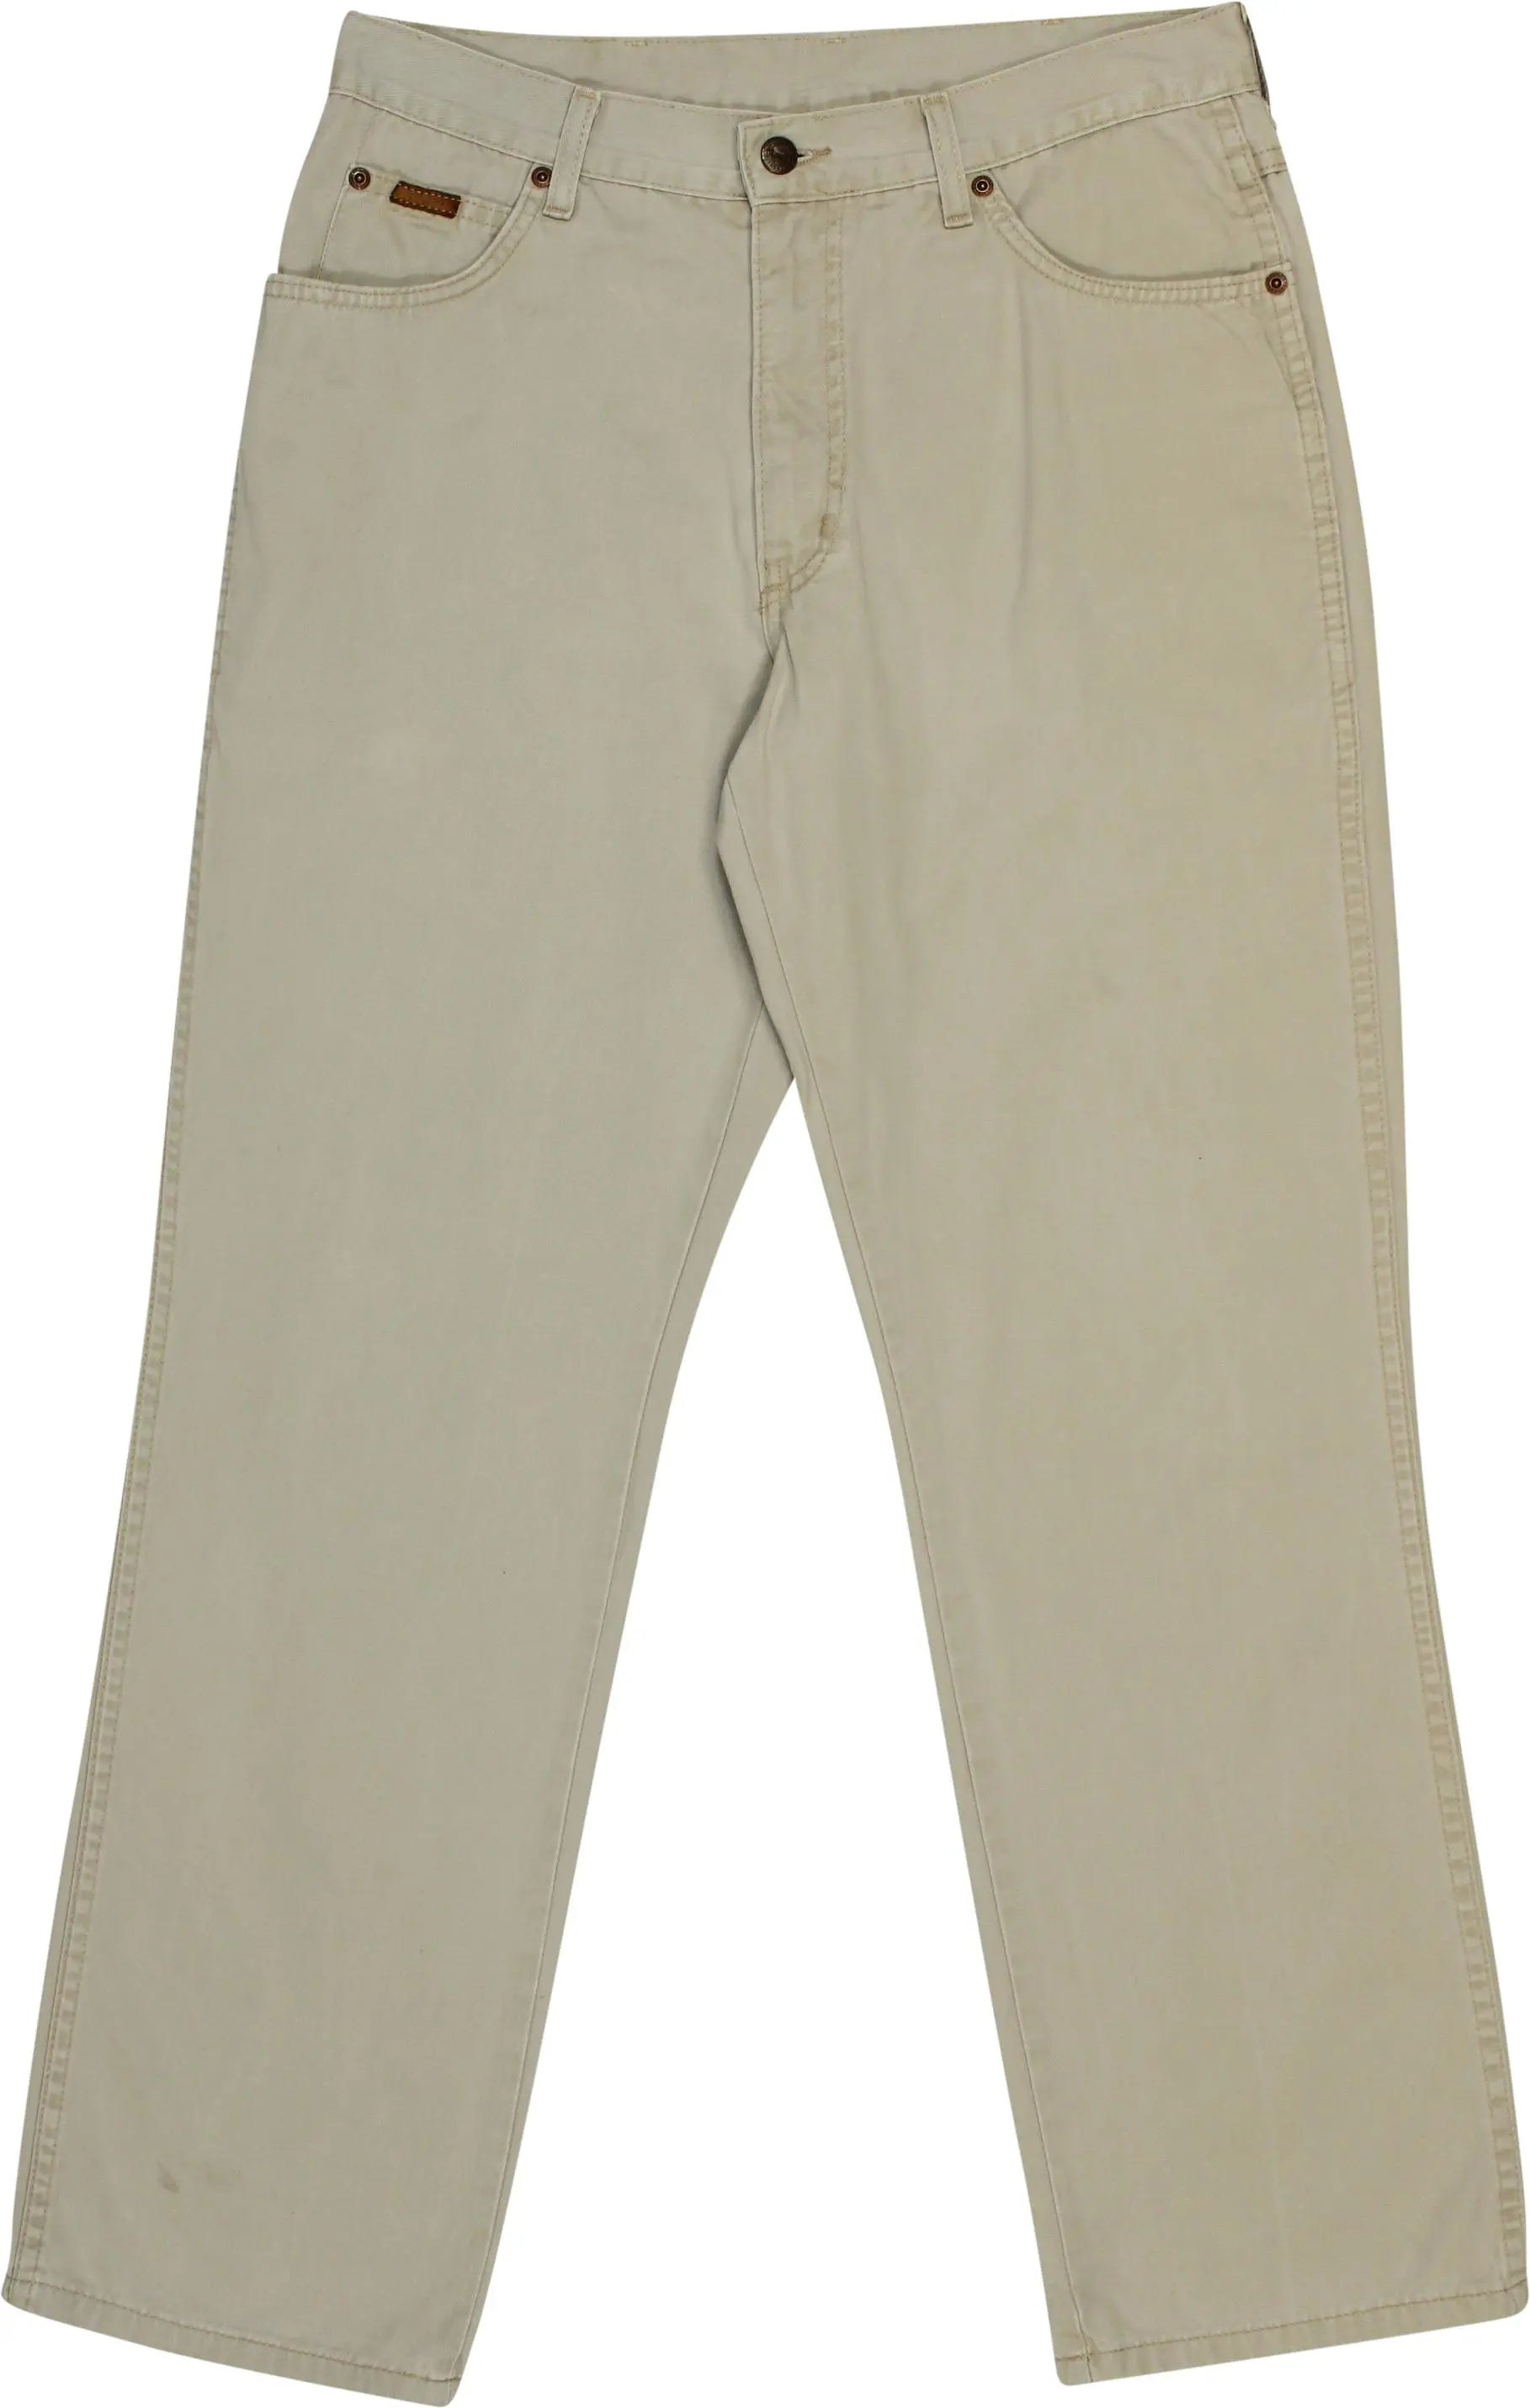 Wrangler - Wrangler Comfort Pants- ThriftTale.com - Vintage and second handclothing